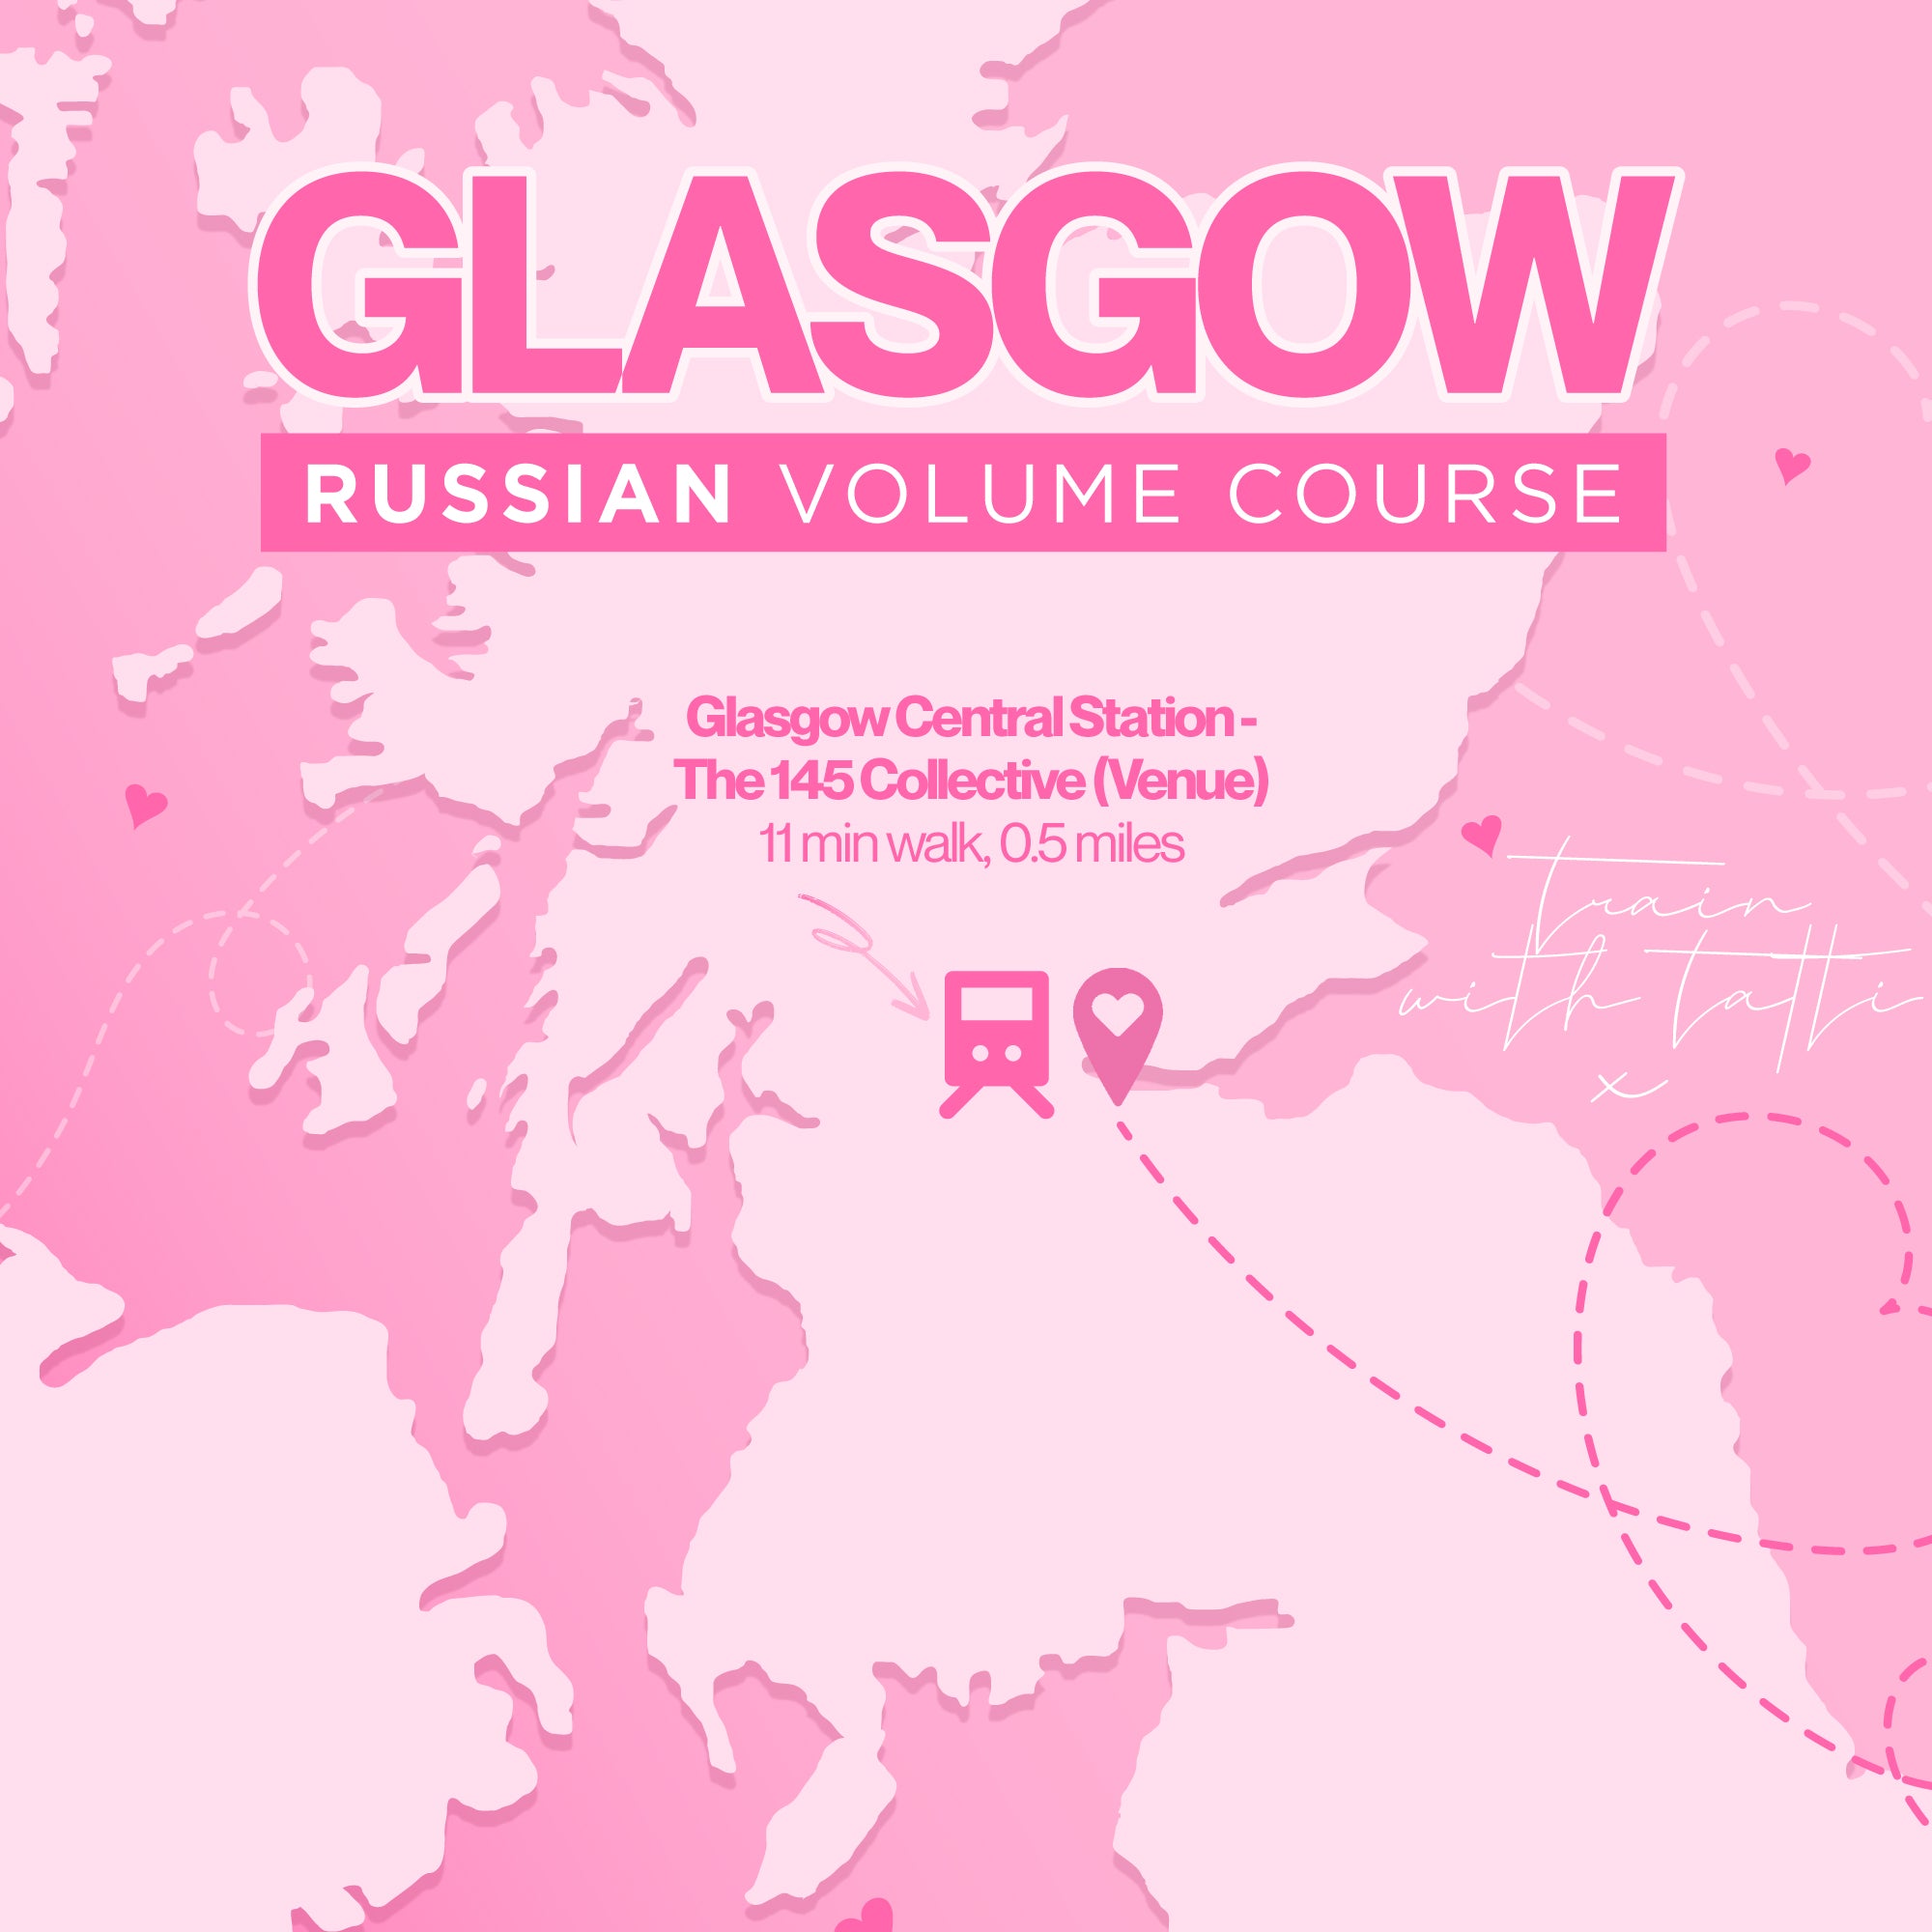 Russian Volume Training Course (Glasgow)